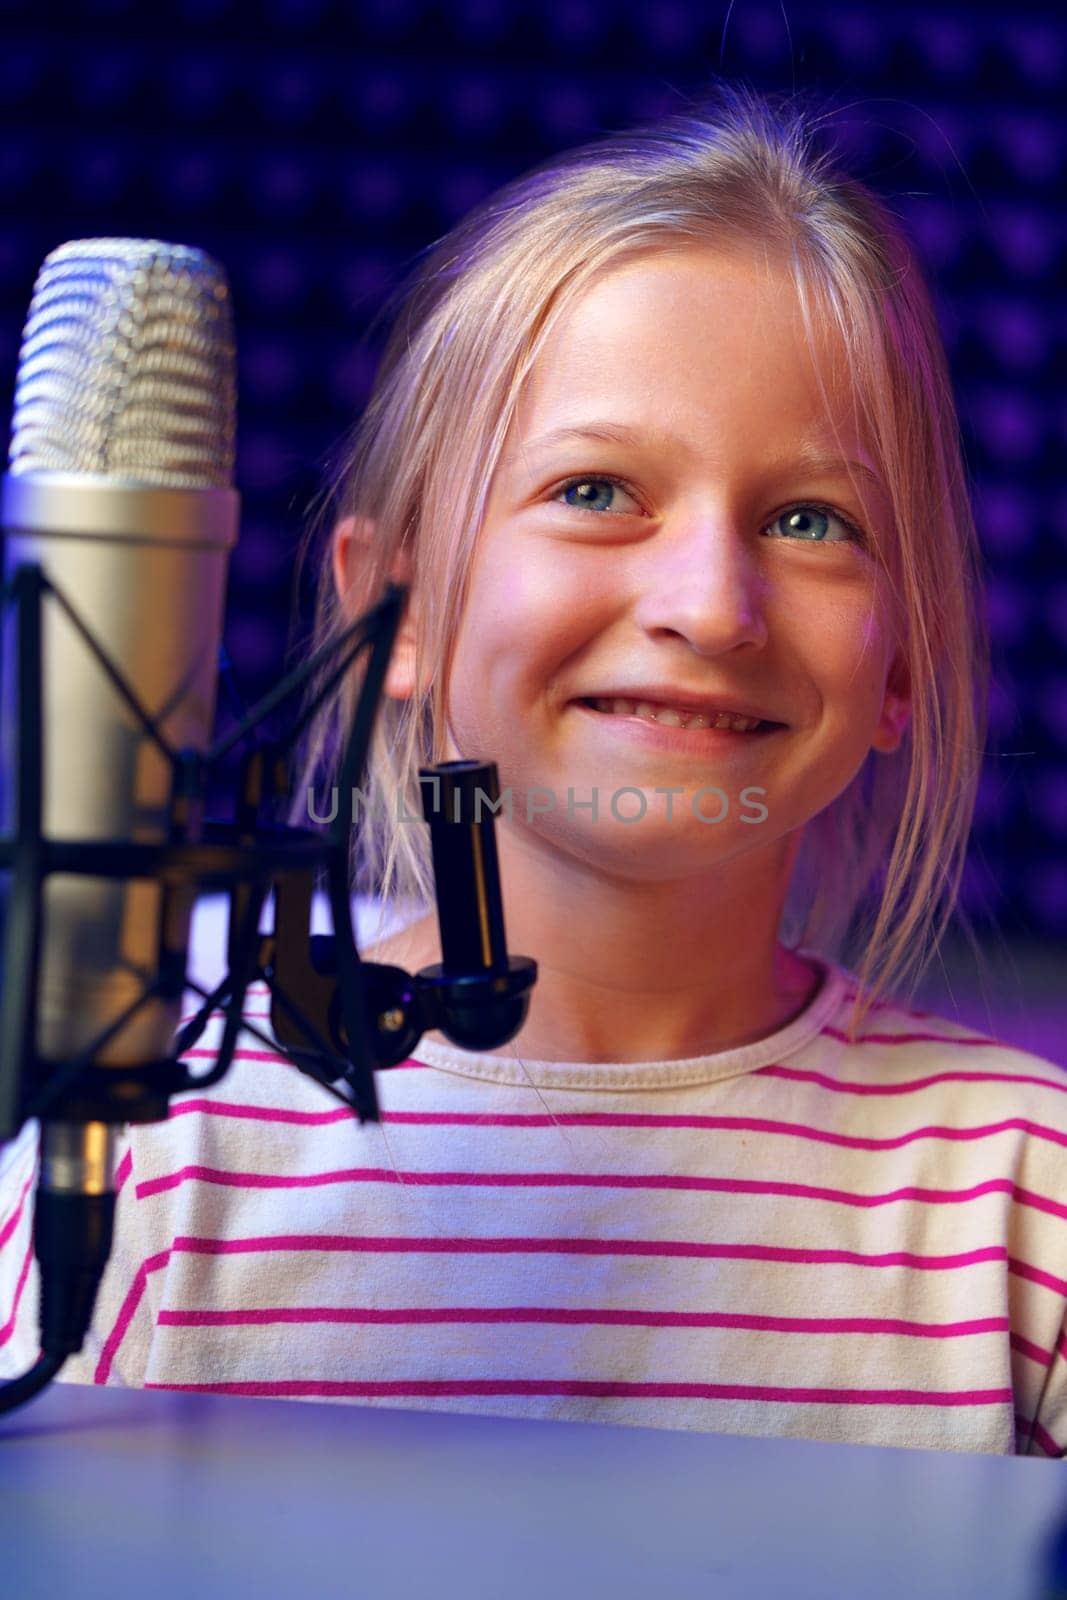 Smiling child girl sitting in recording studio portrait close up